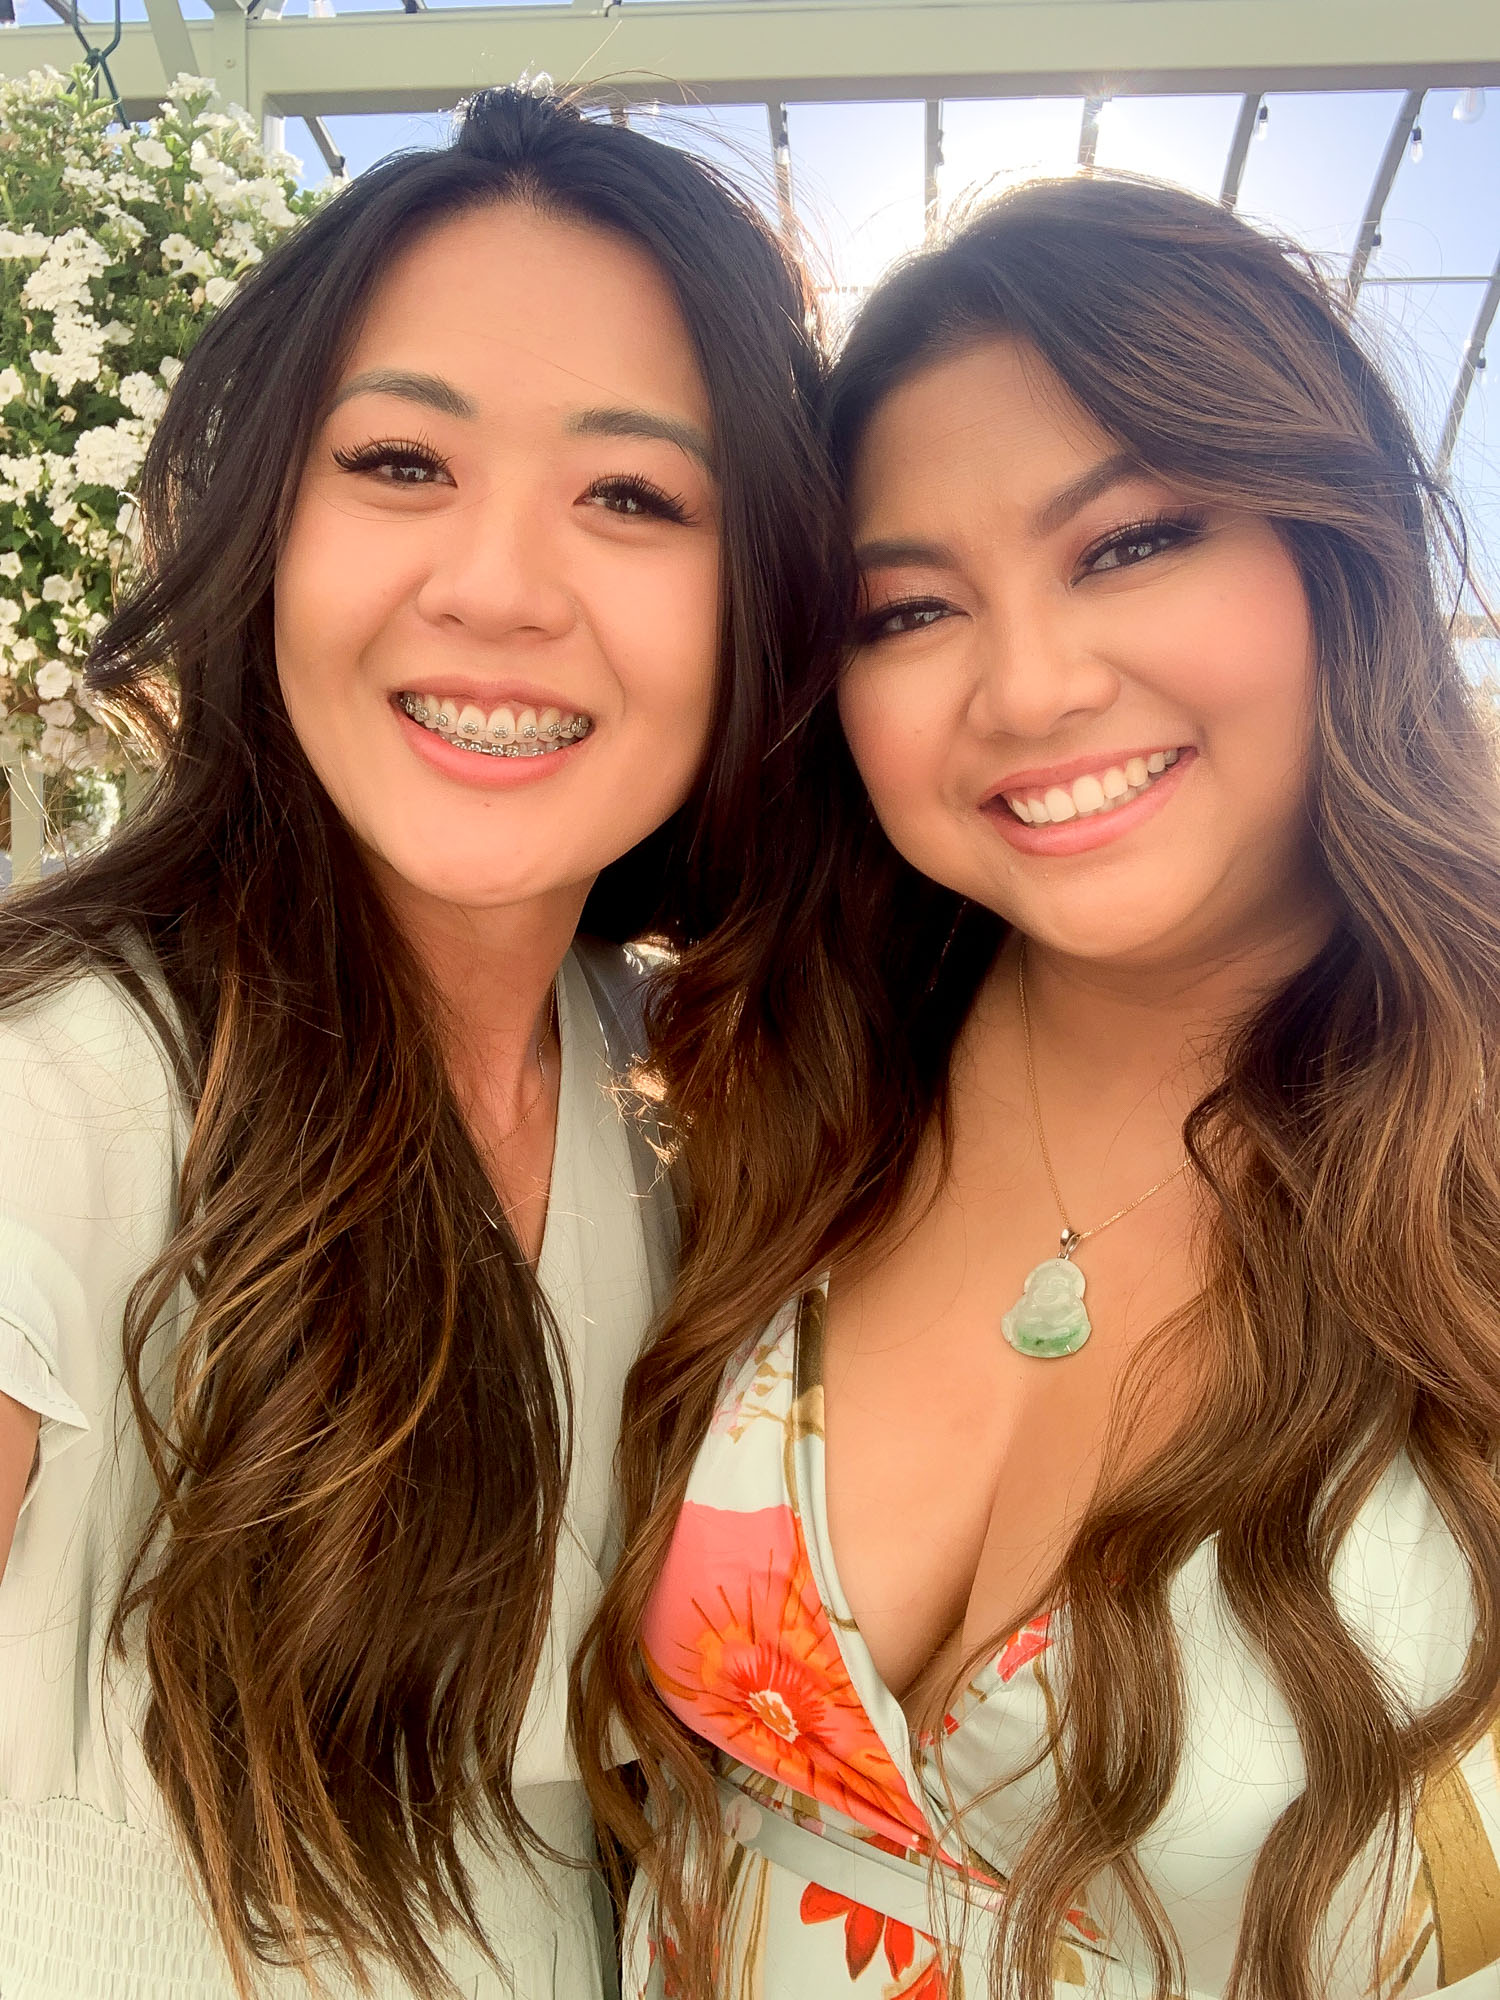 Arizona Blogger Demi Bang and her cousin Breanna at a wedding in Utah.